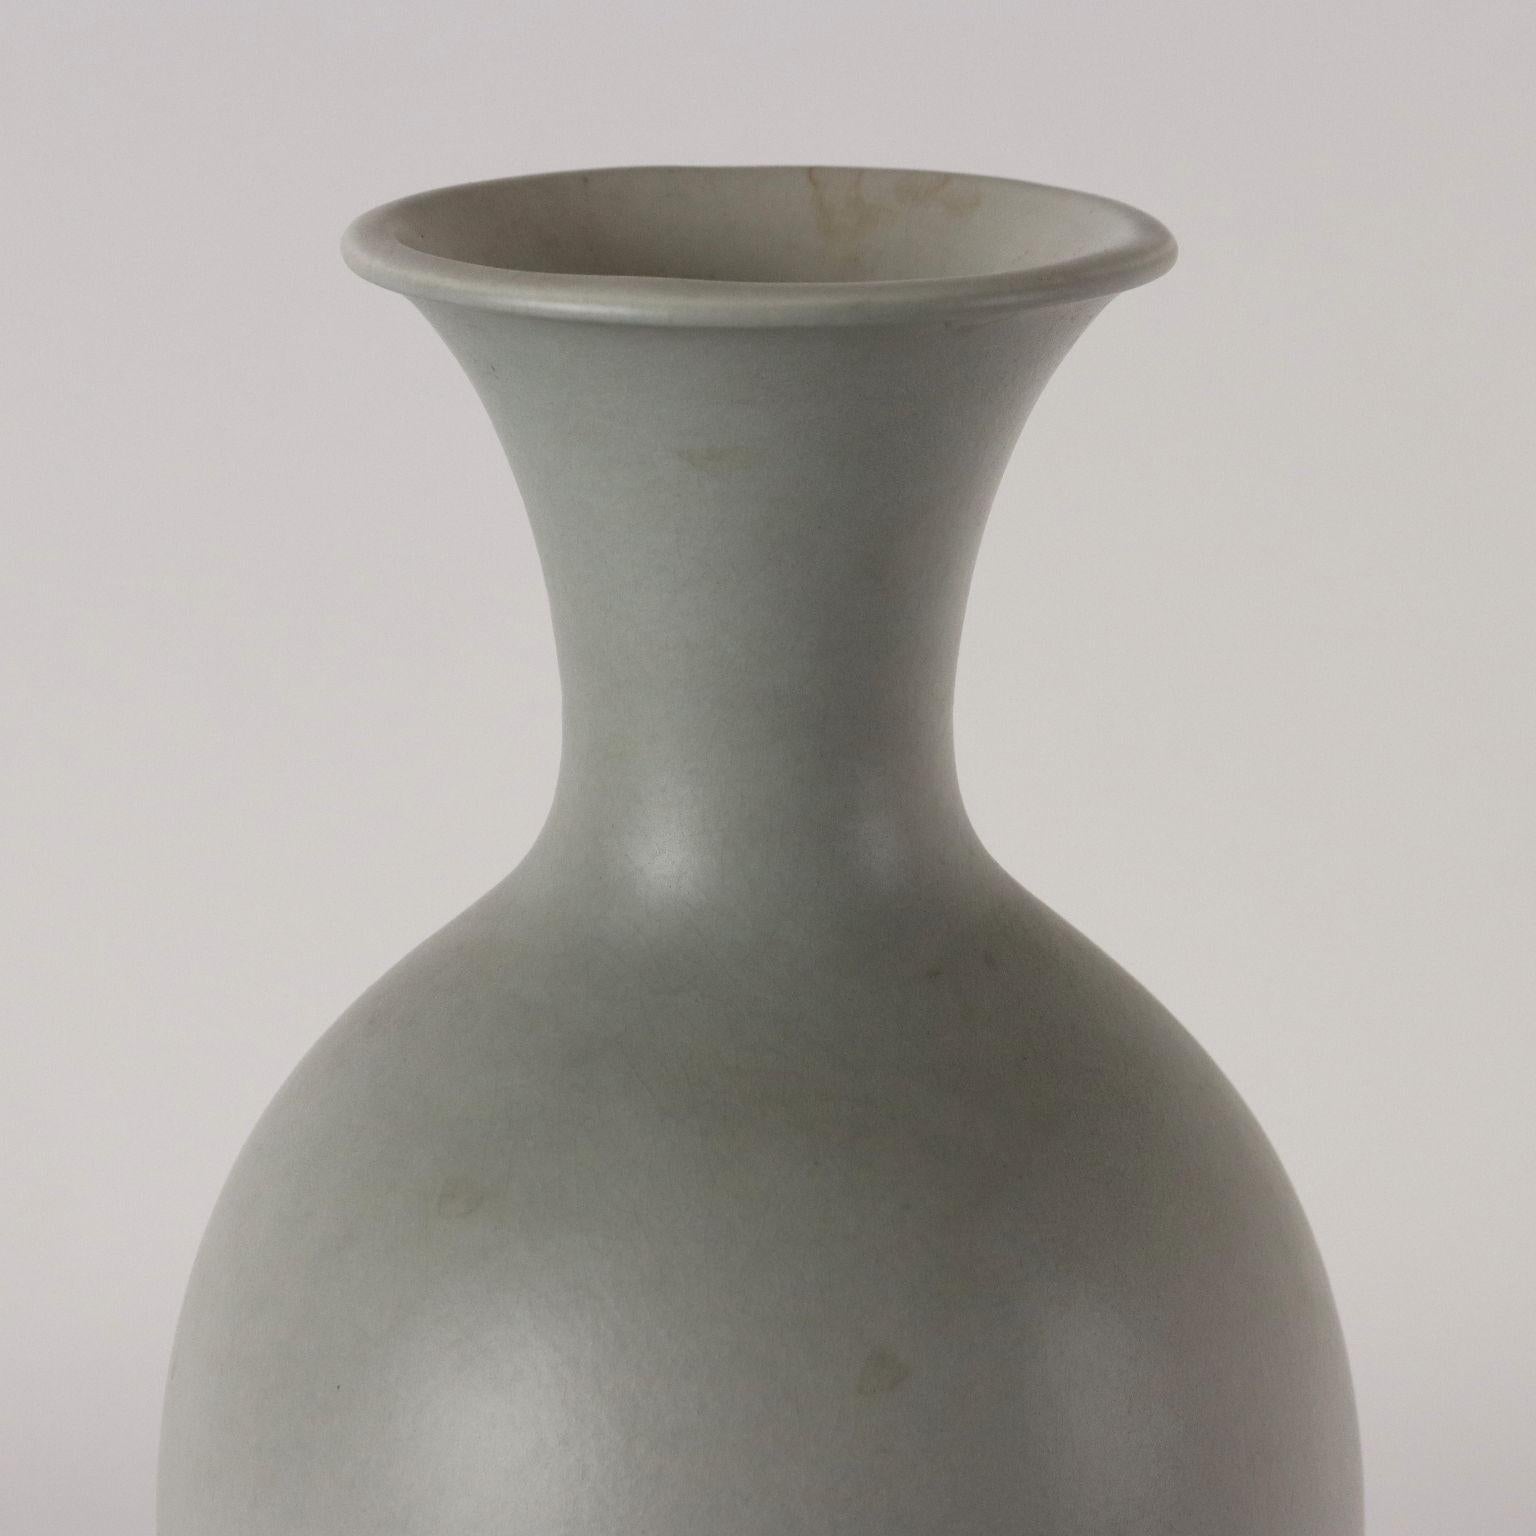 Vase aus glasierter Keramik mit Reliefdekor am Sockel. Marke des Herstellers unter dem Sockel.